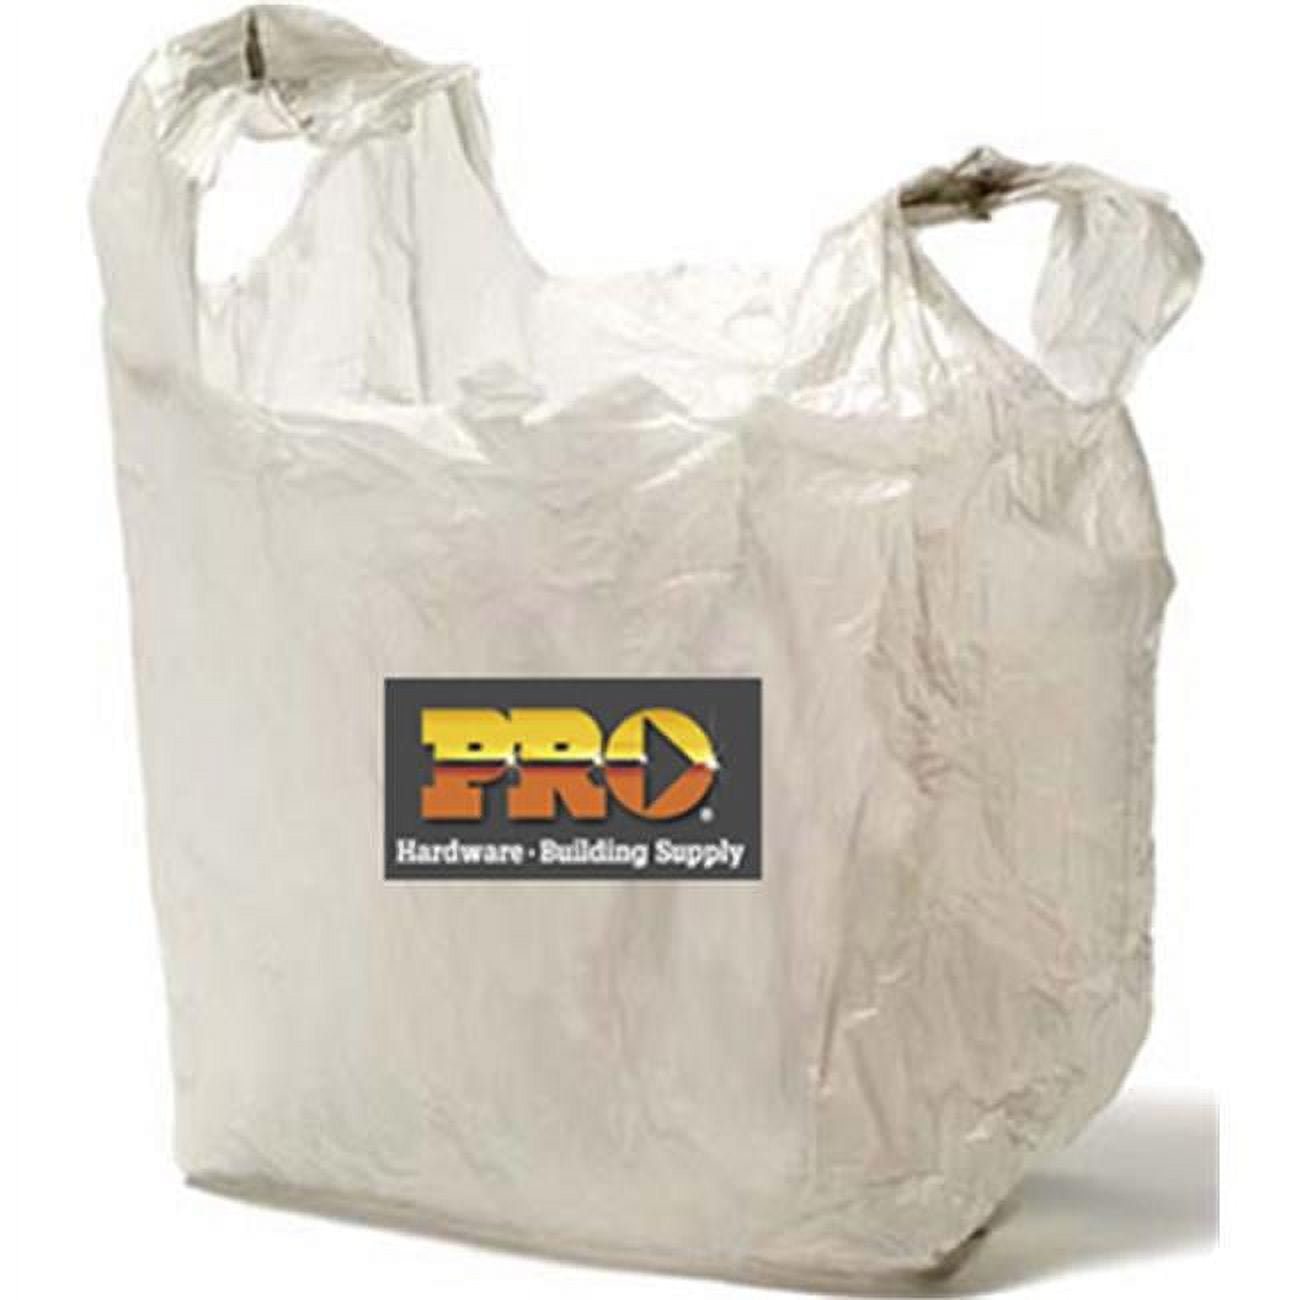 Picture of Hilex Poly 8028657 Rollmate Medium Pro Plastic Bags - 2000 Count